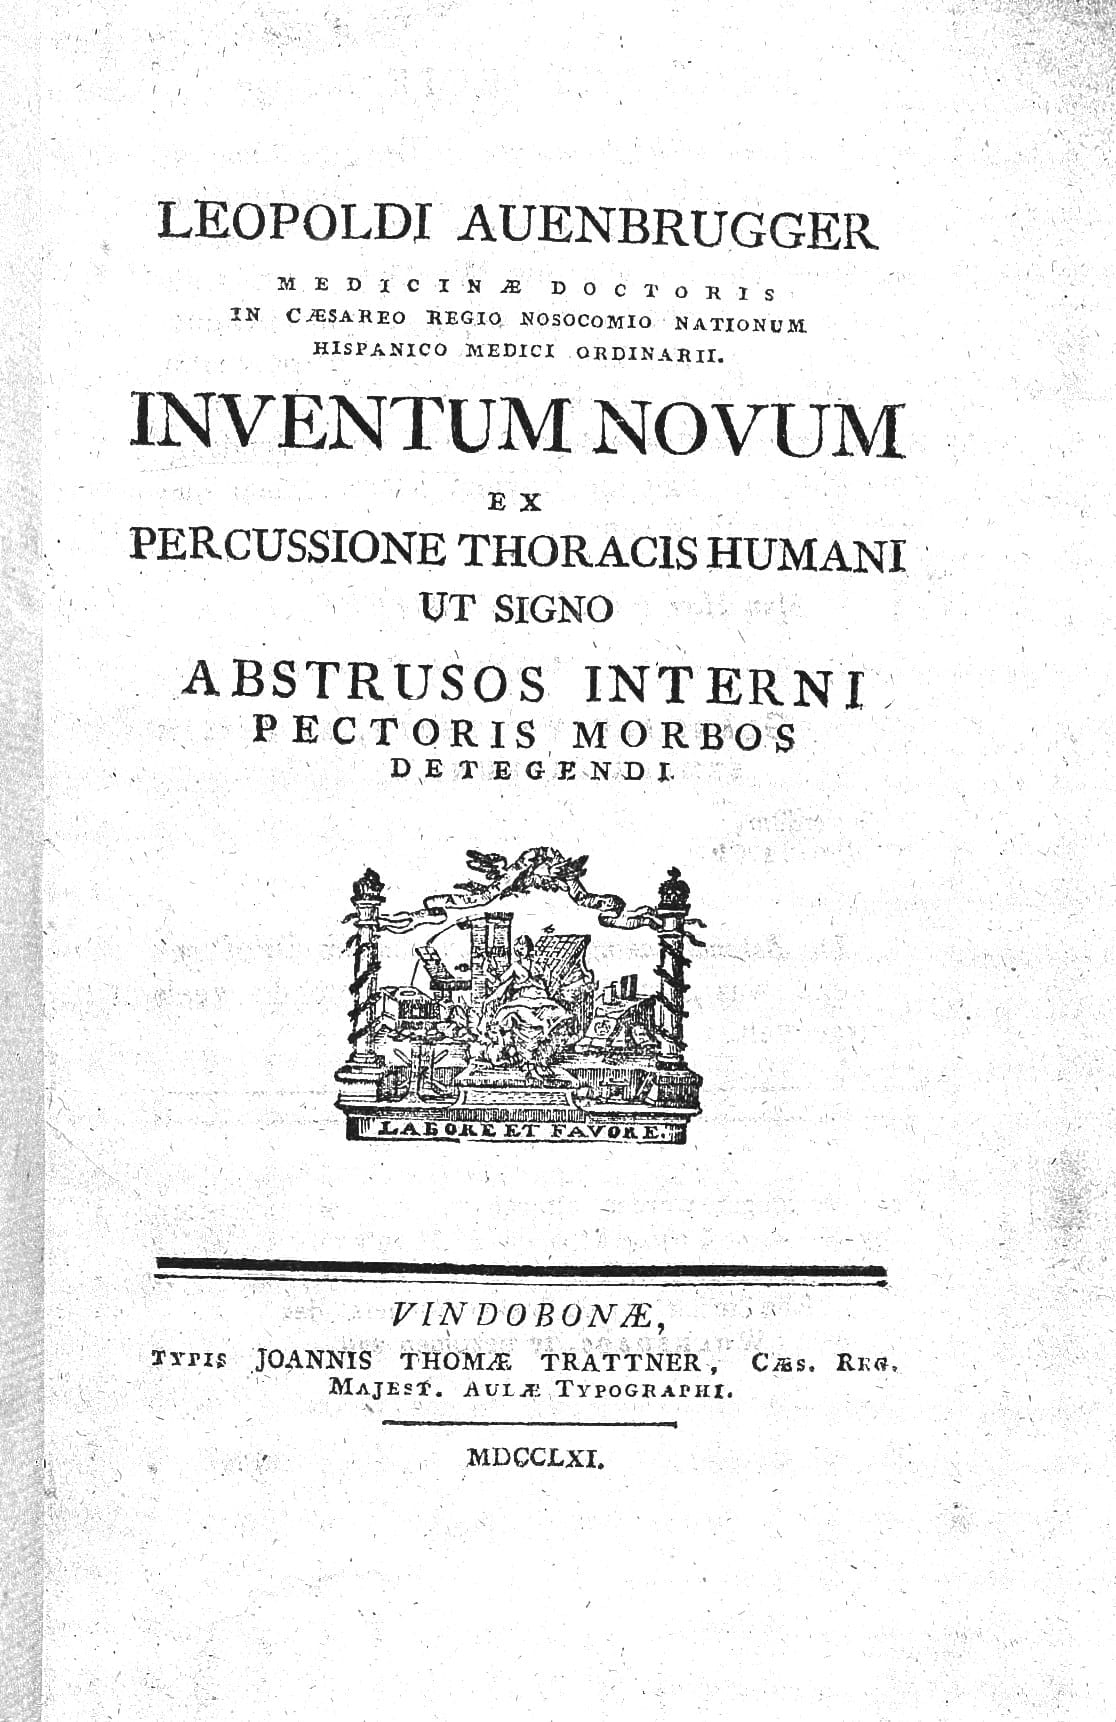 Title page of Inventum novum